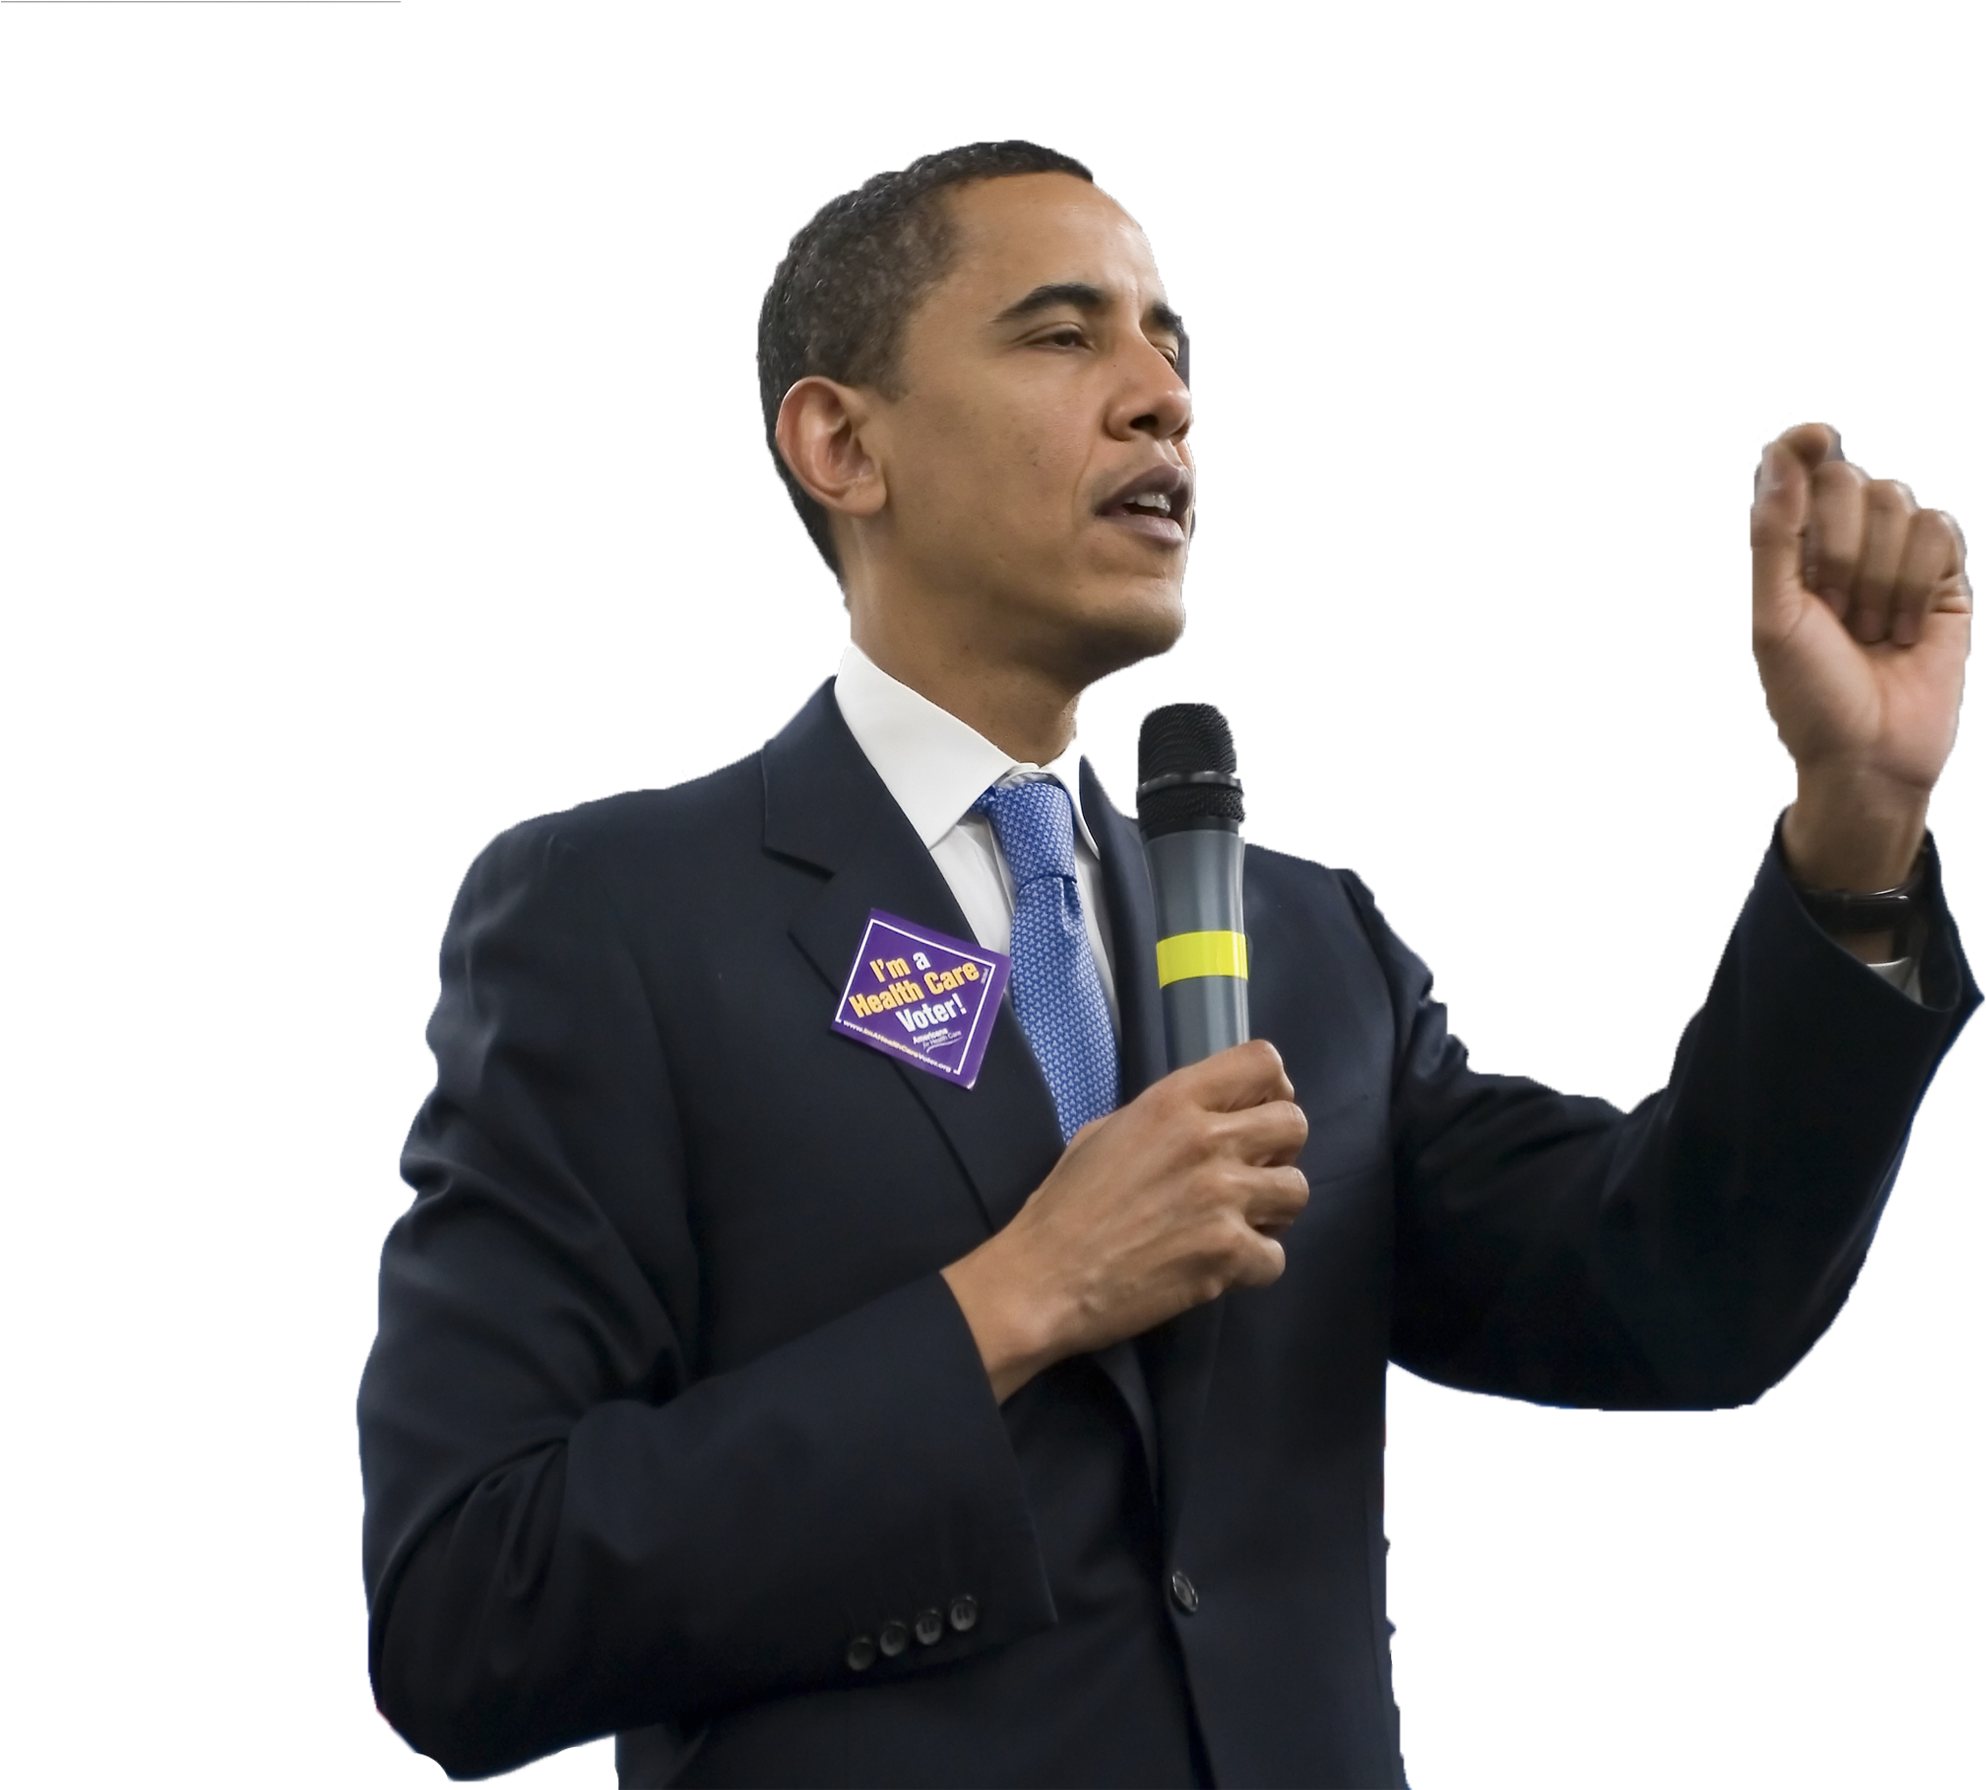 Barack Obama Speakingat Event